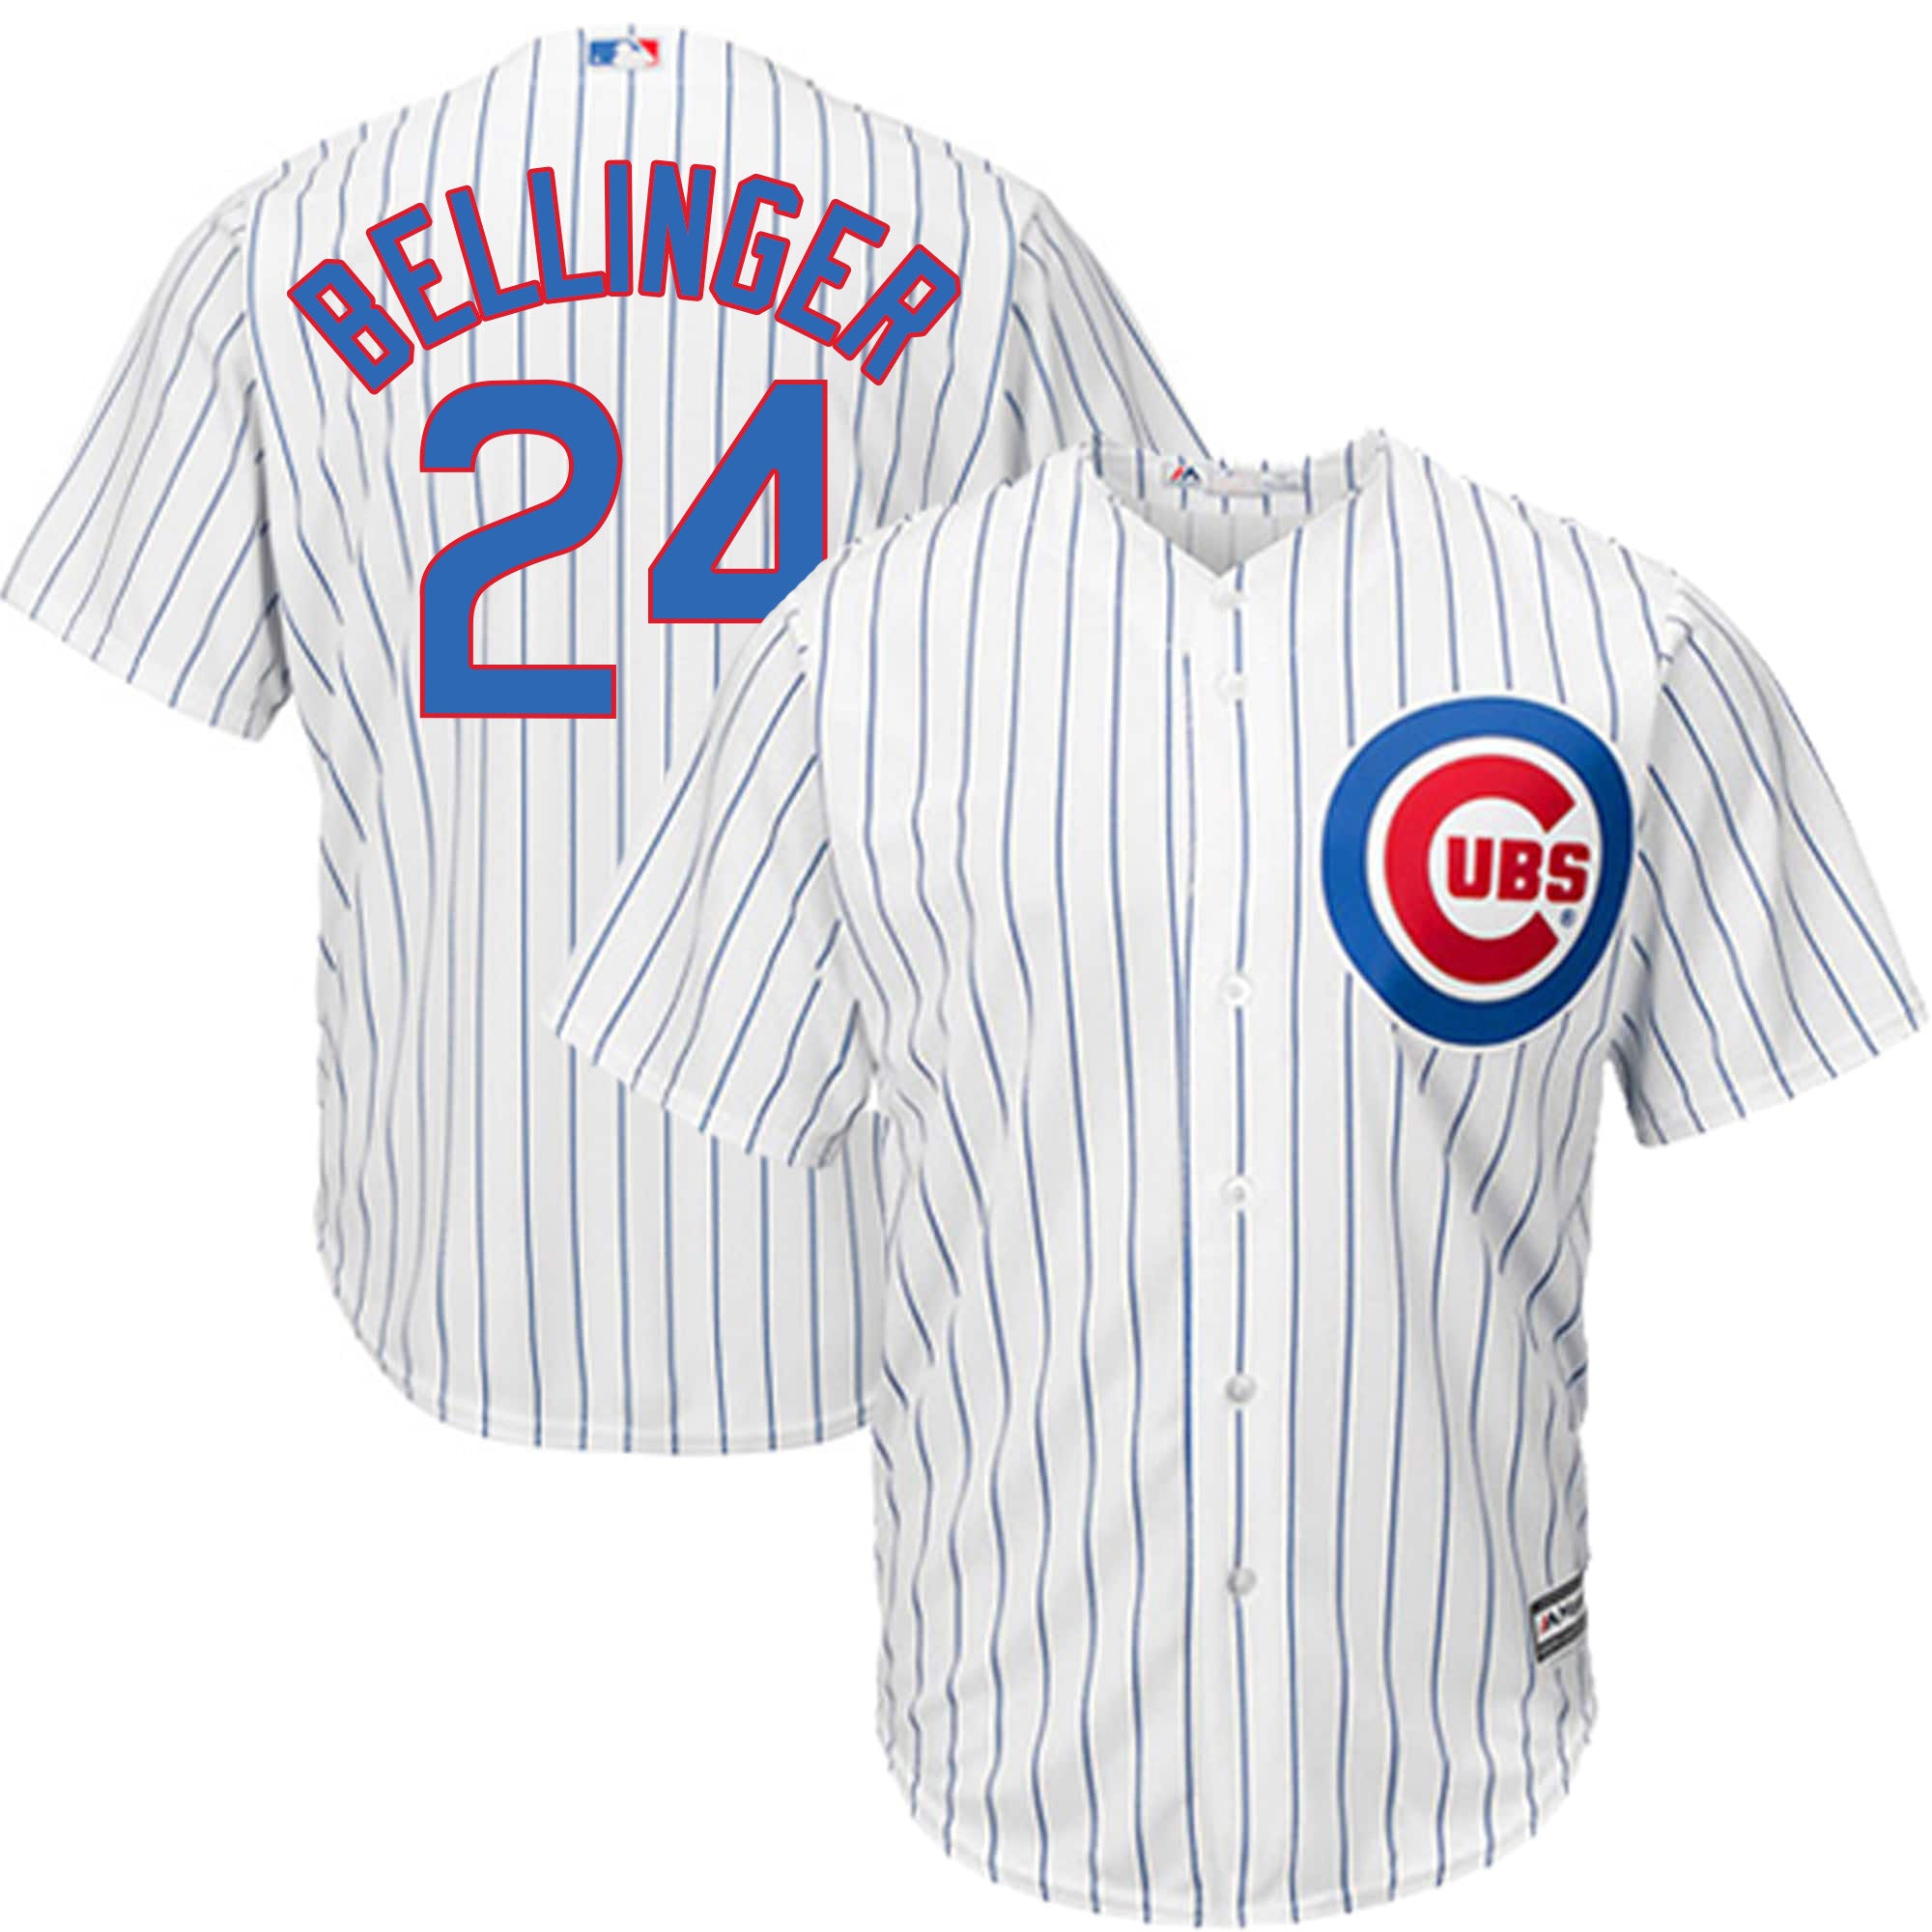 New Chicago Cubs Kyle Schwarber Jersey, Men's XL for Sale in